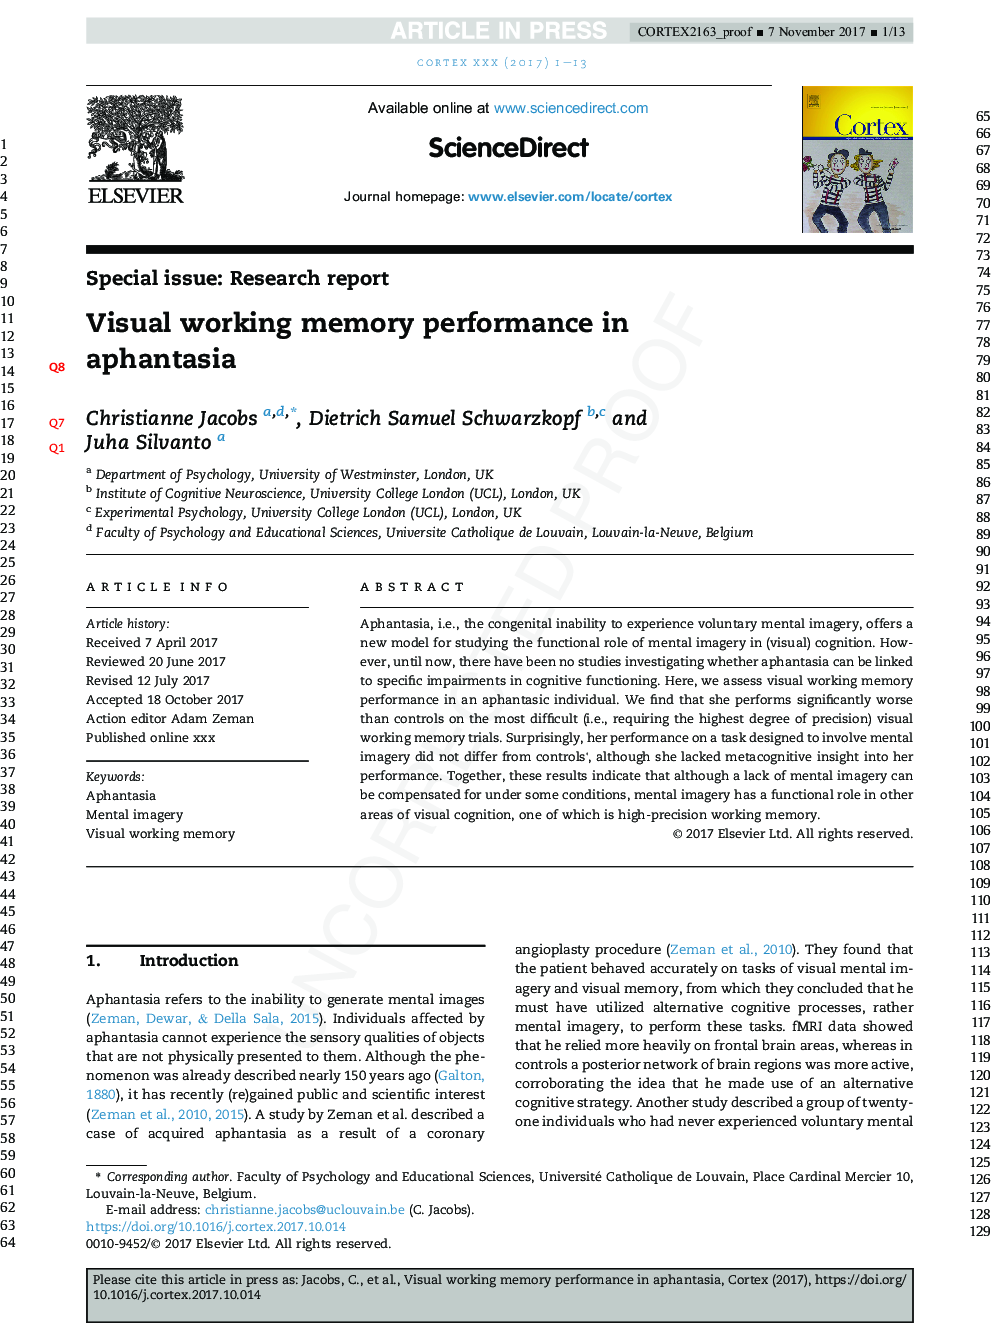 Visual working memory performance in aphantasia